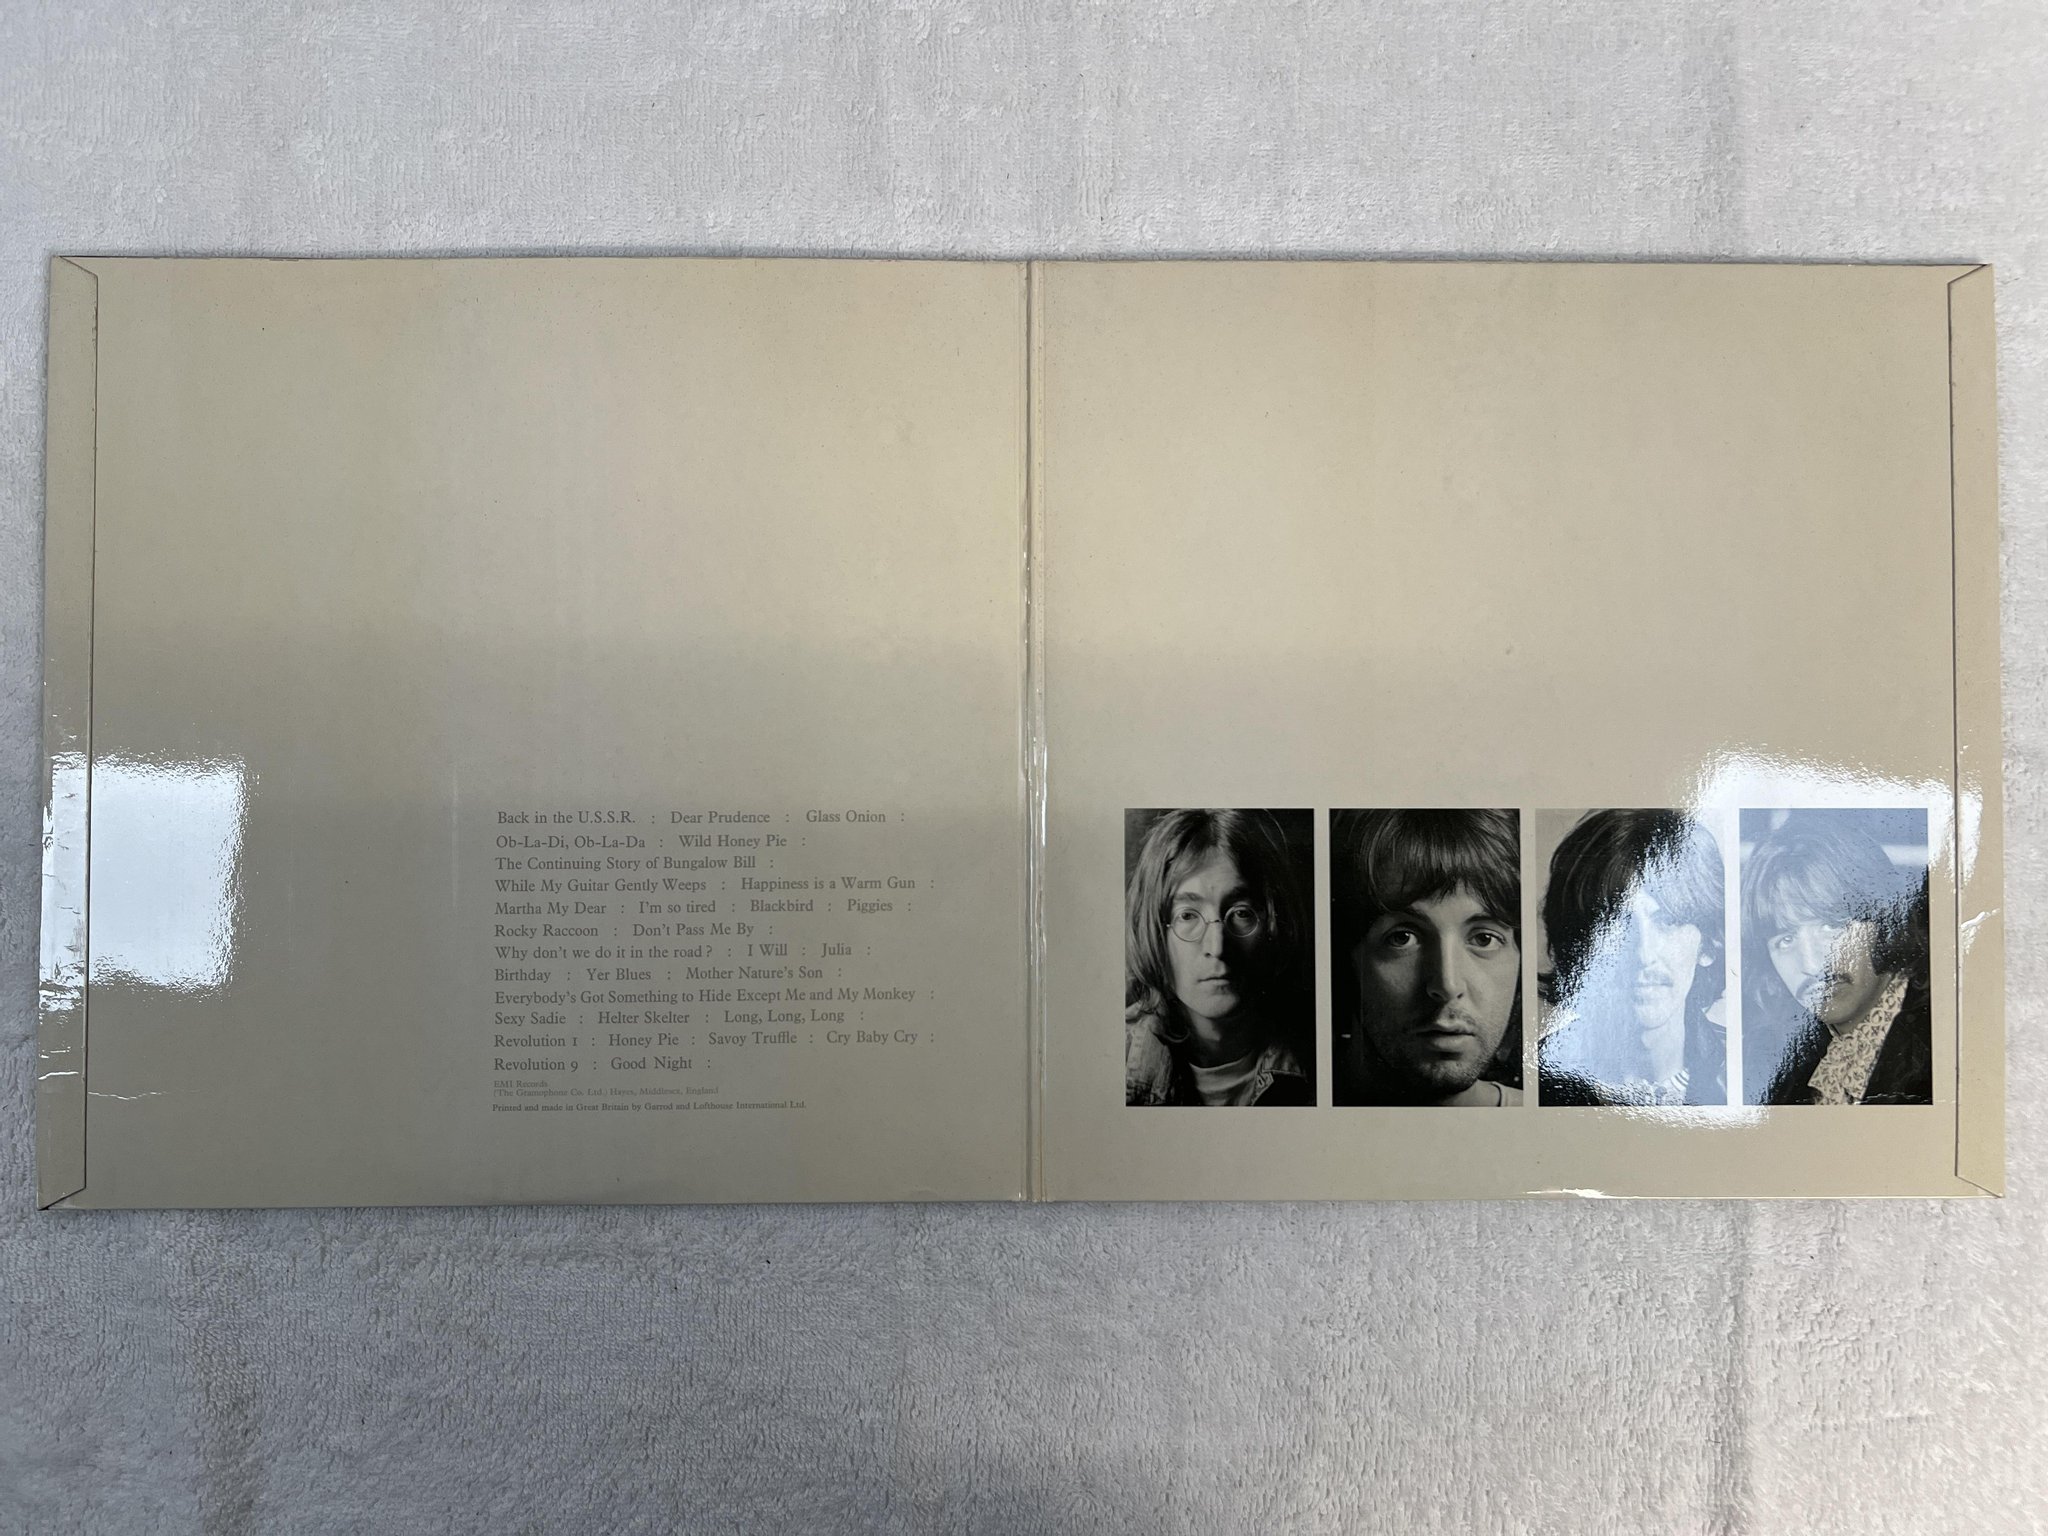 Omslagsbild för skivan THE BEATLES white album 2xLP -68 UK PCS 7067/68 *** complete copy ***